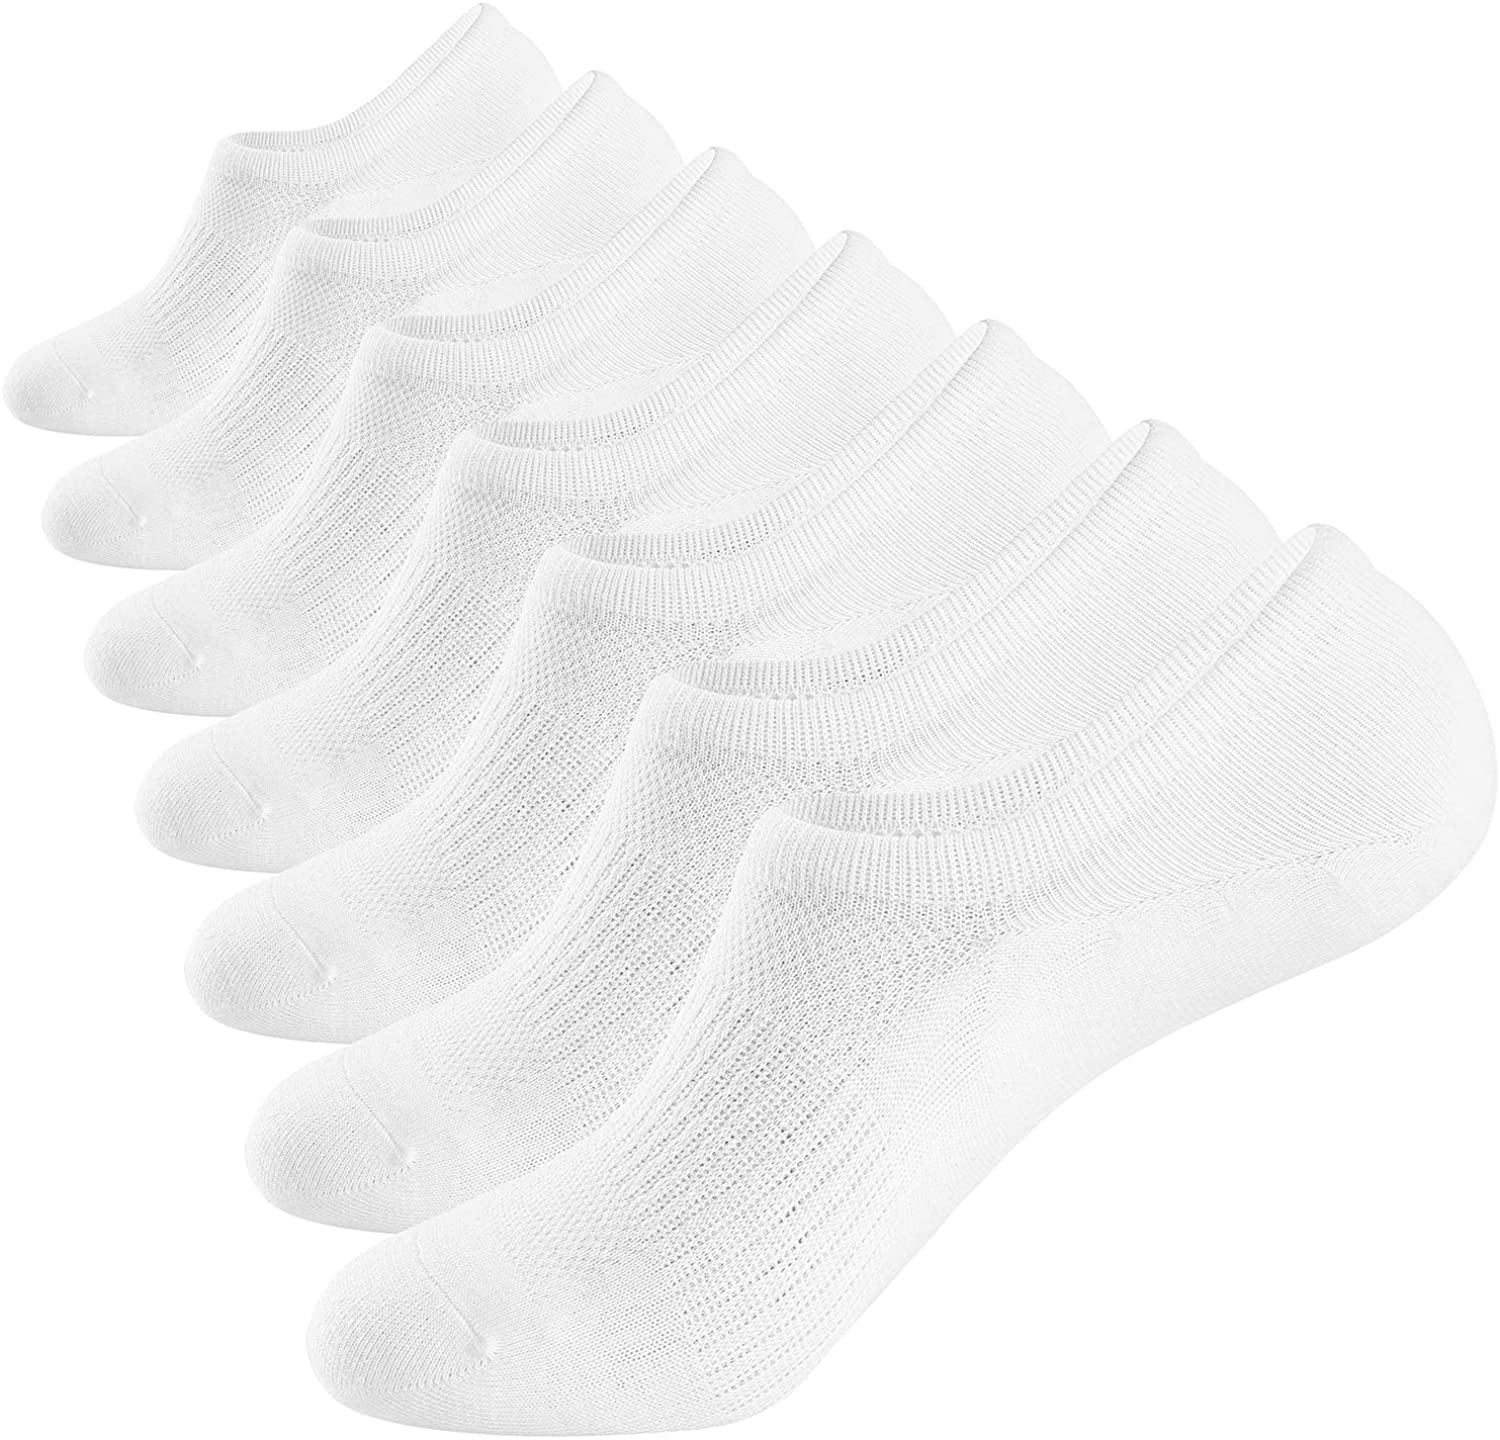 HOdo No Show Socks Mens Low Cut Cotton Casual Socks 8 Pairs 